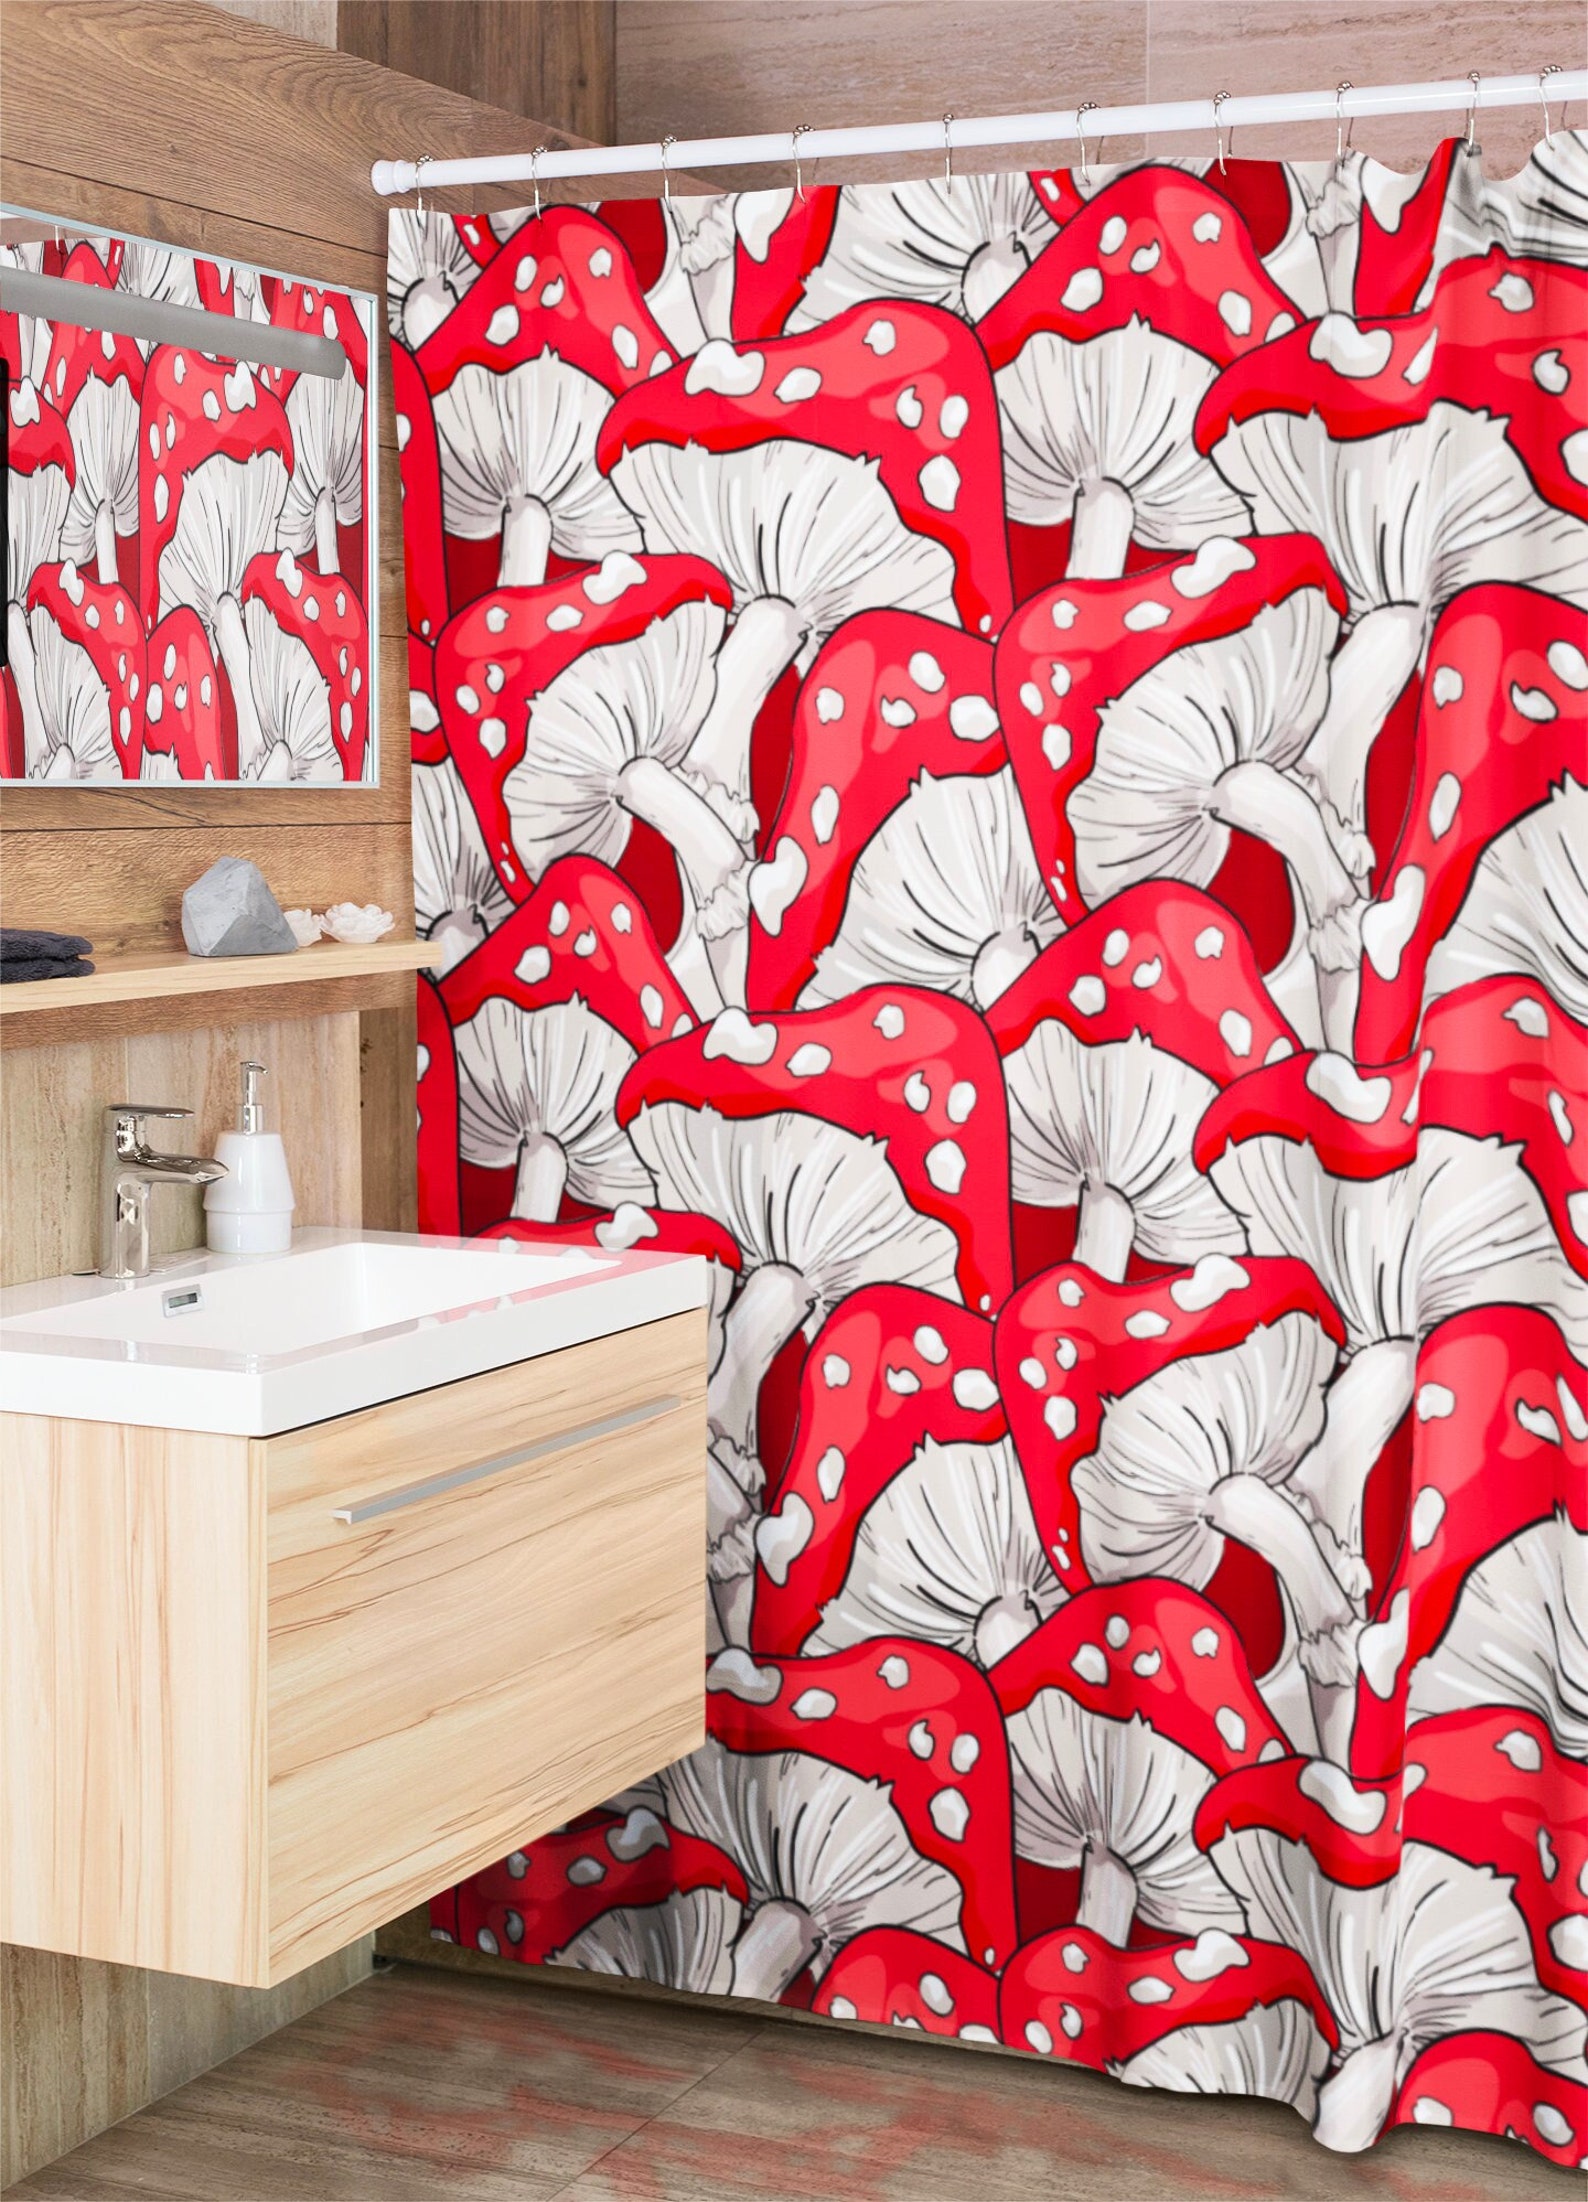 https://iamgonegirldesigns.com/wp-content/uploads/2022/07/red-mushrooms-boho-curtains-bathroom-decor-1.jpeg